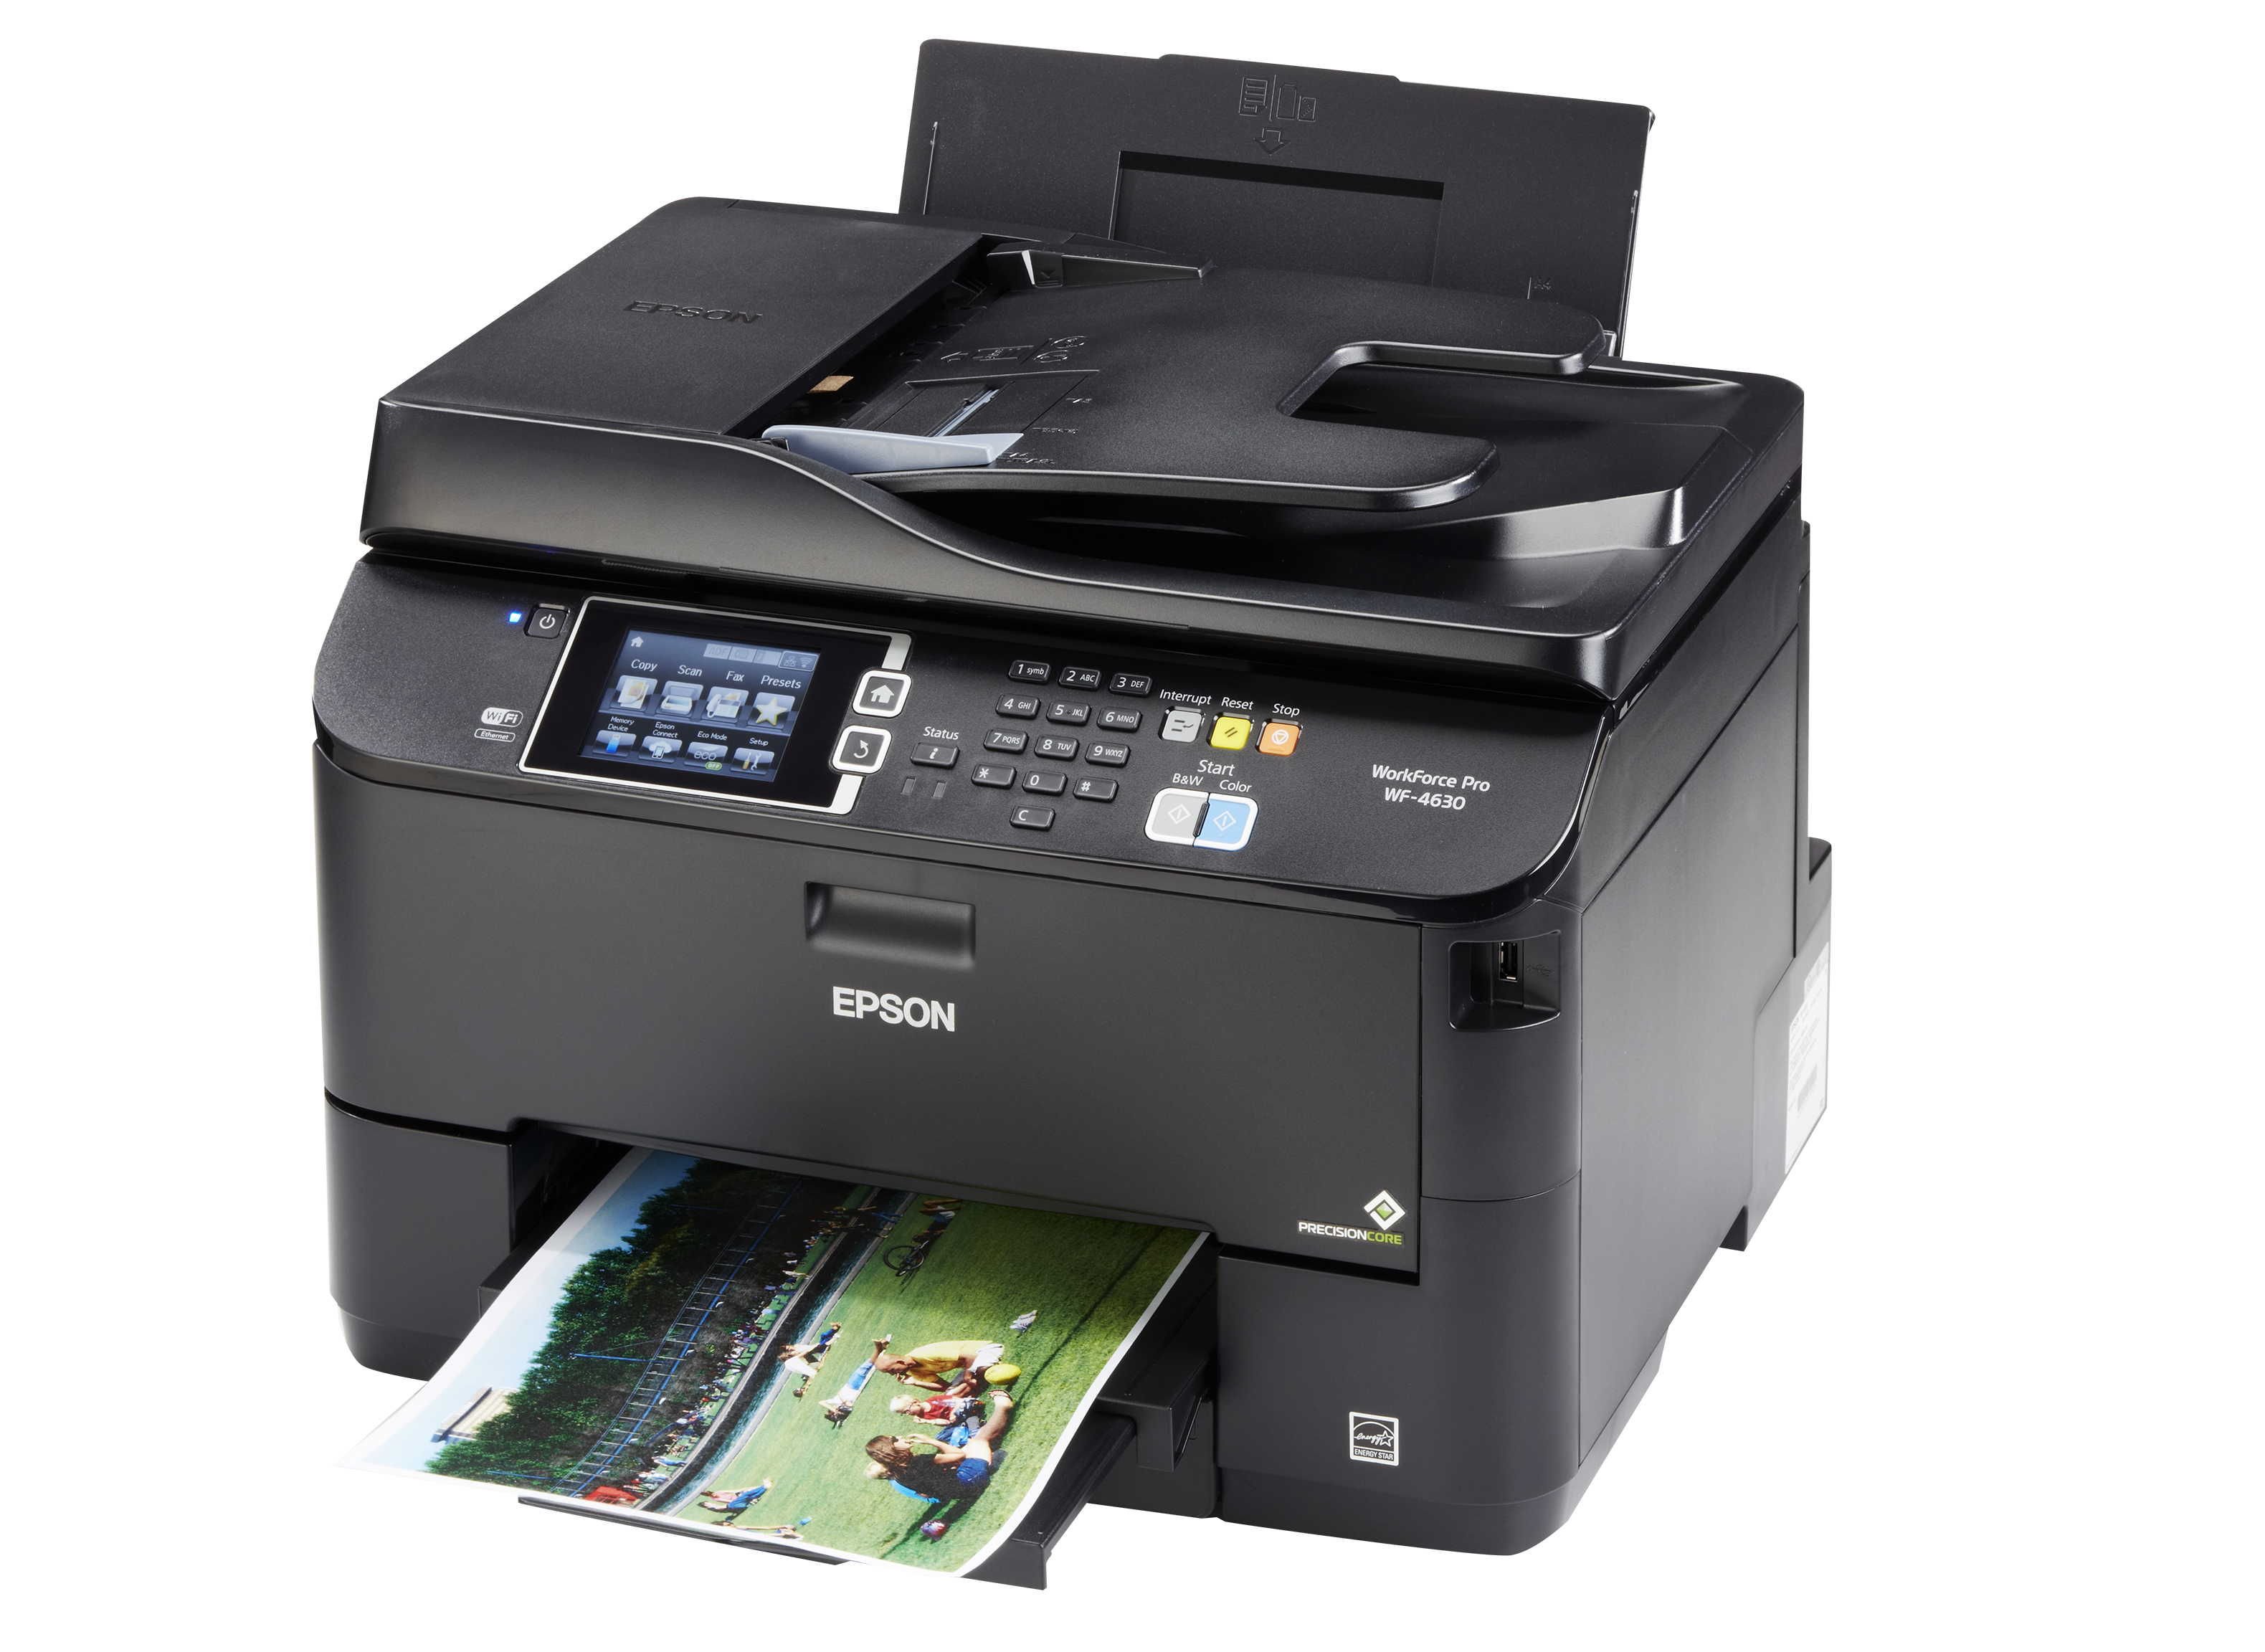 Epson Workforce Pro WF-4630 Printer Reports